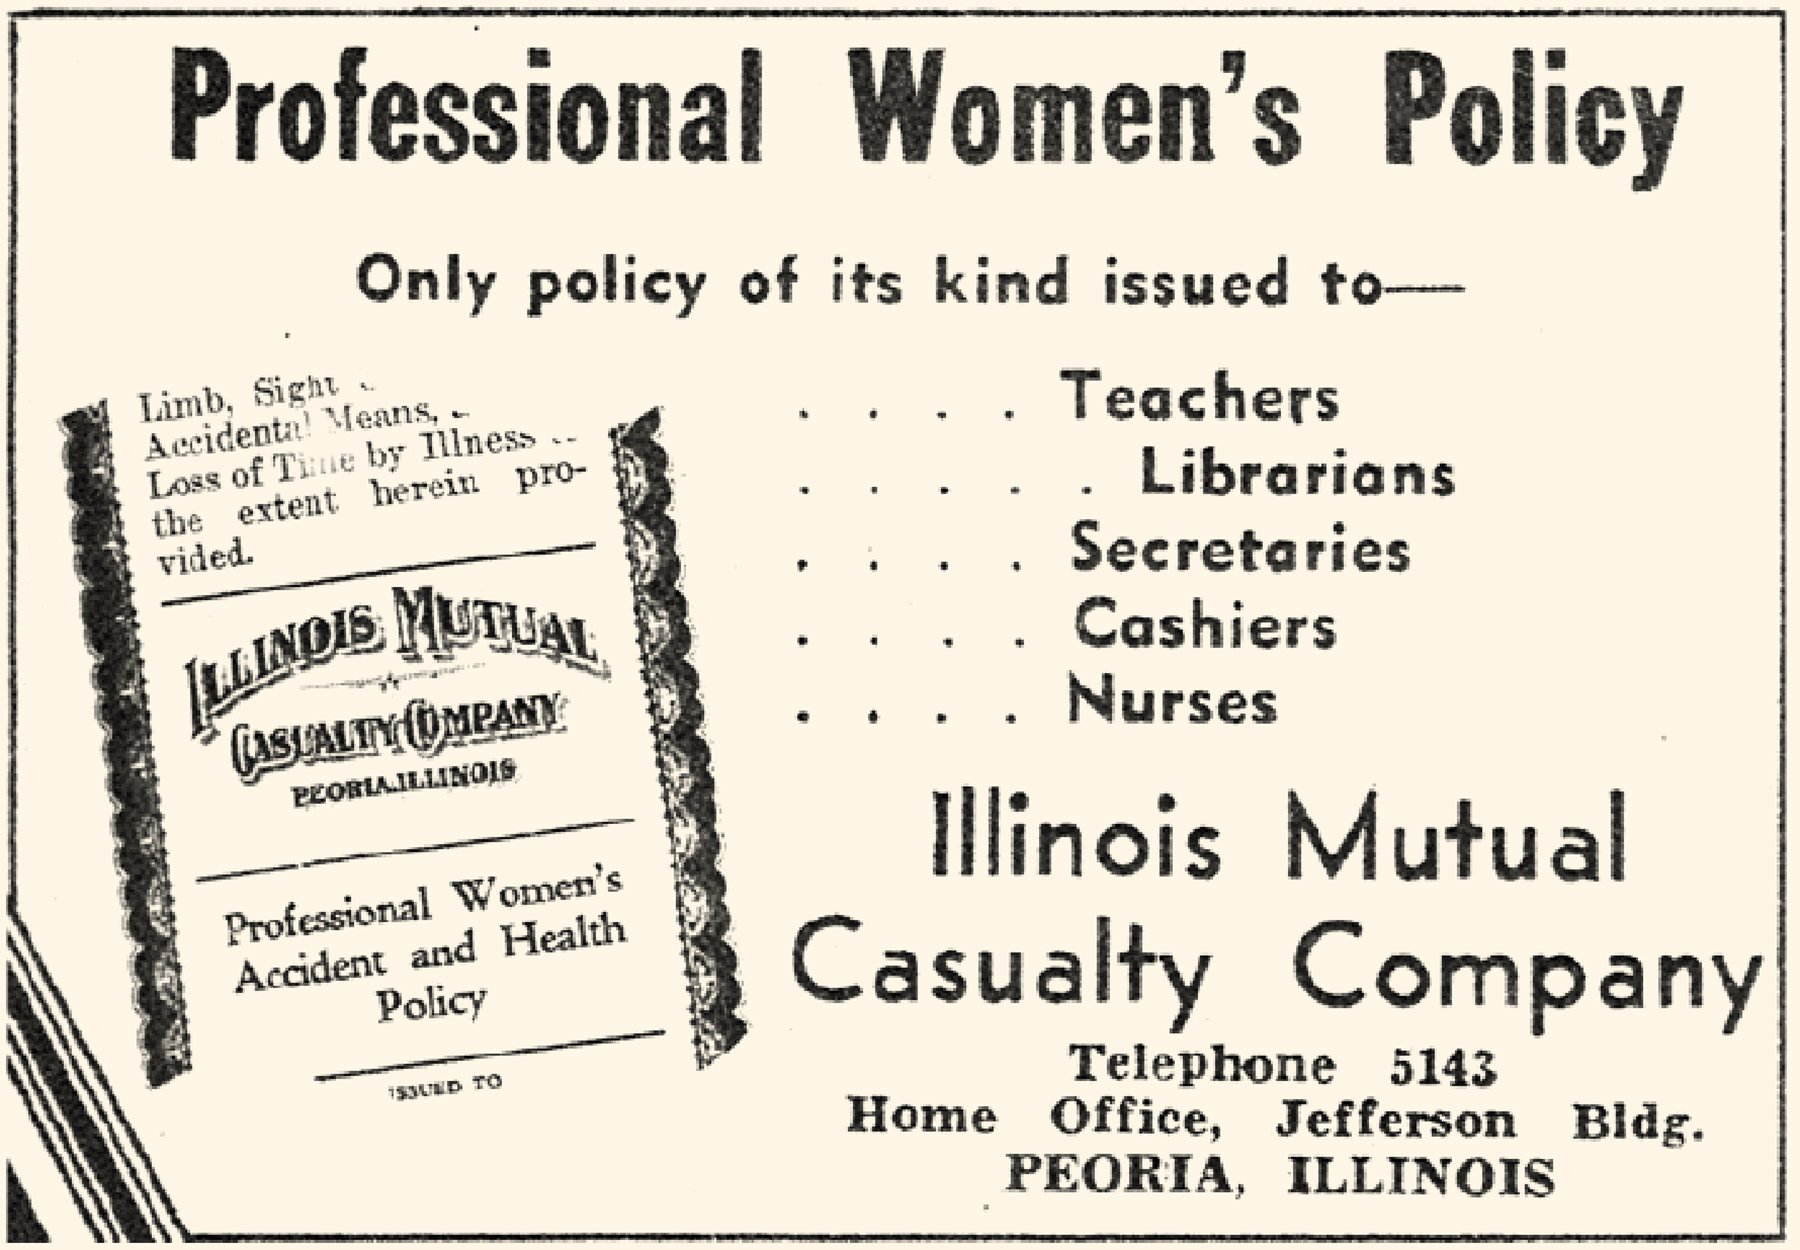 1934 advertisement from Illinois Mutual